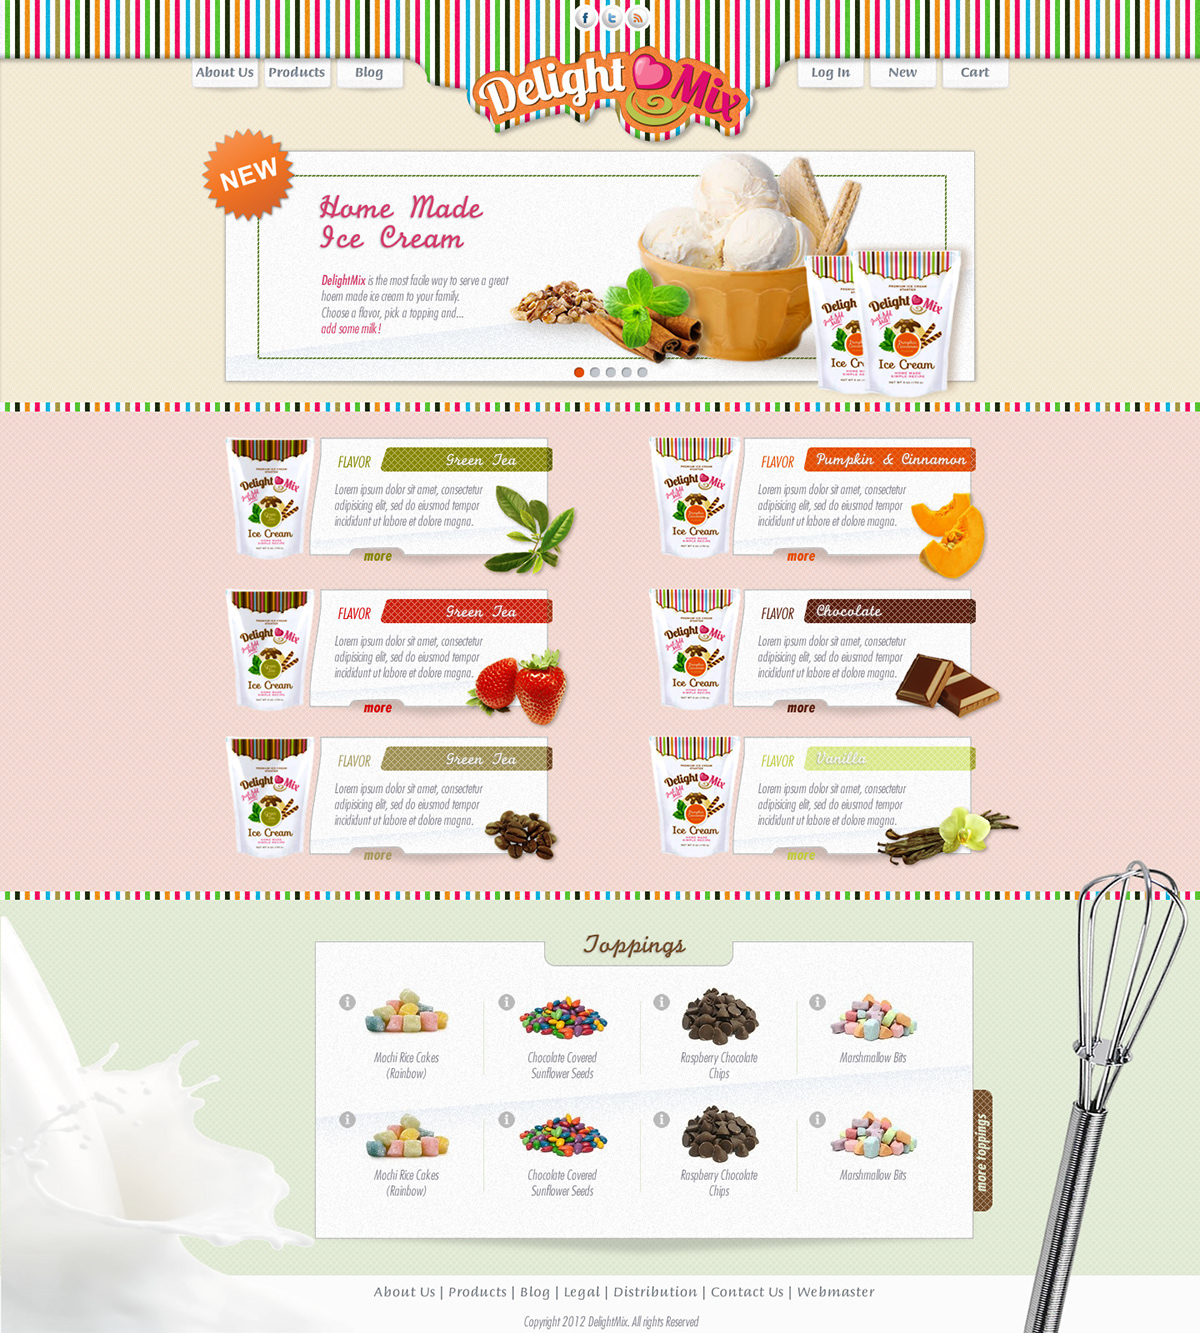 DELIGHT  mix  ice cream  ice  cream  retail  online  FOOD  web  web design